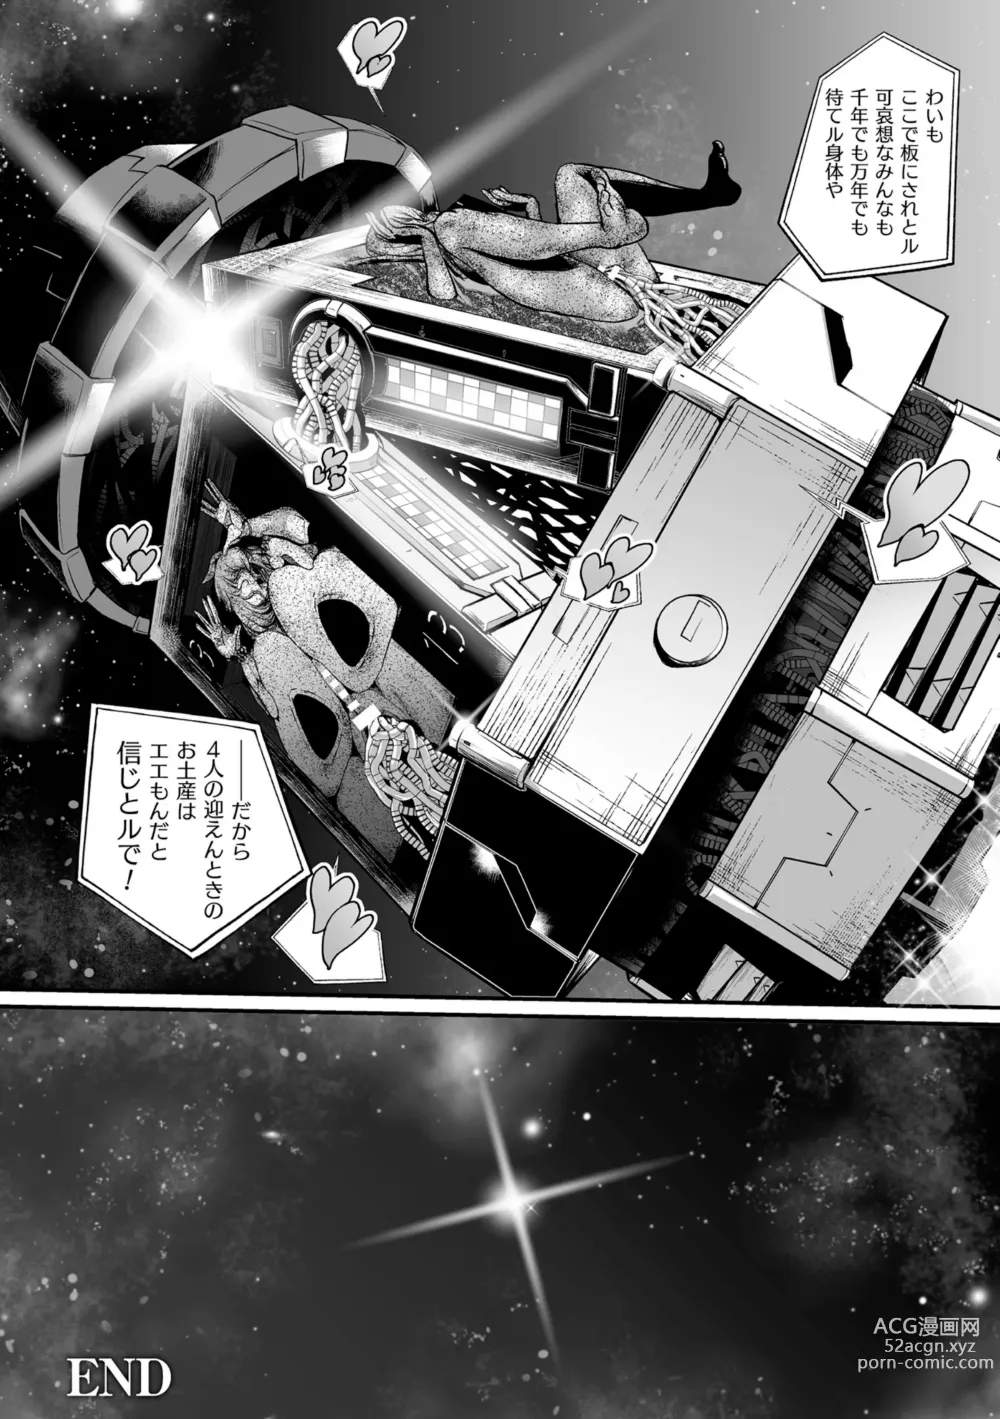 Page 36 of manga Carbonite Cocytus - Episode III